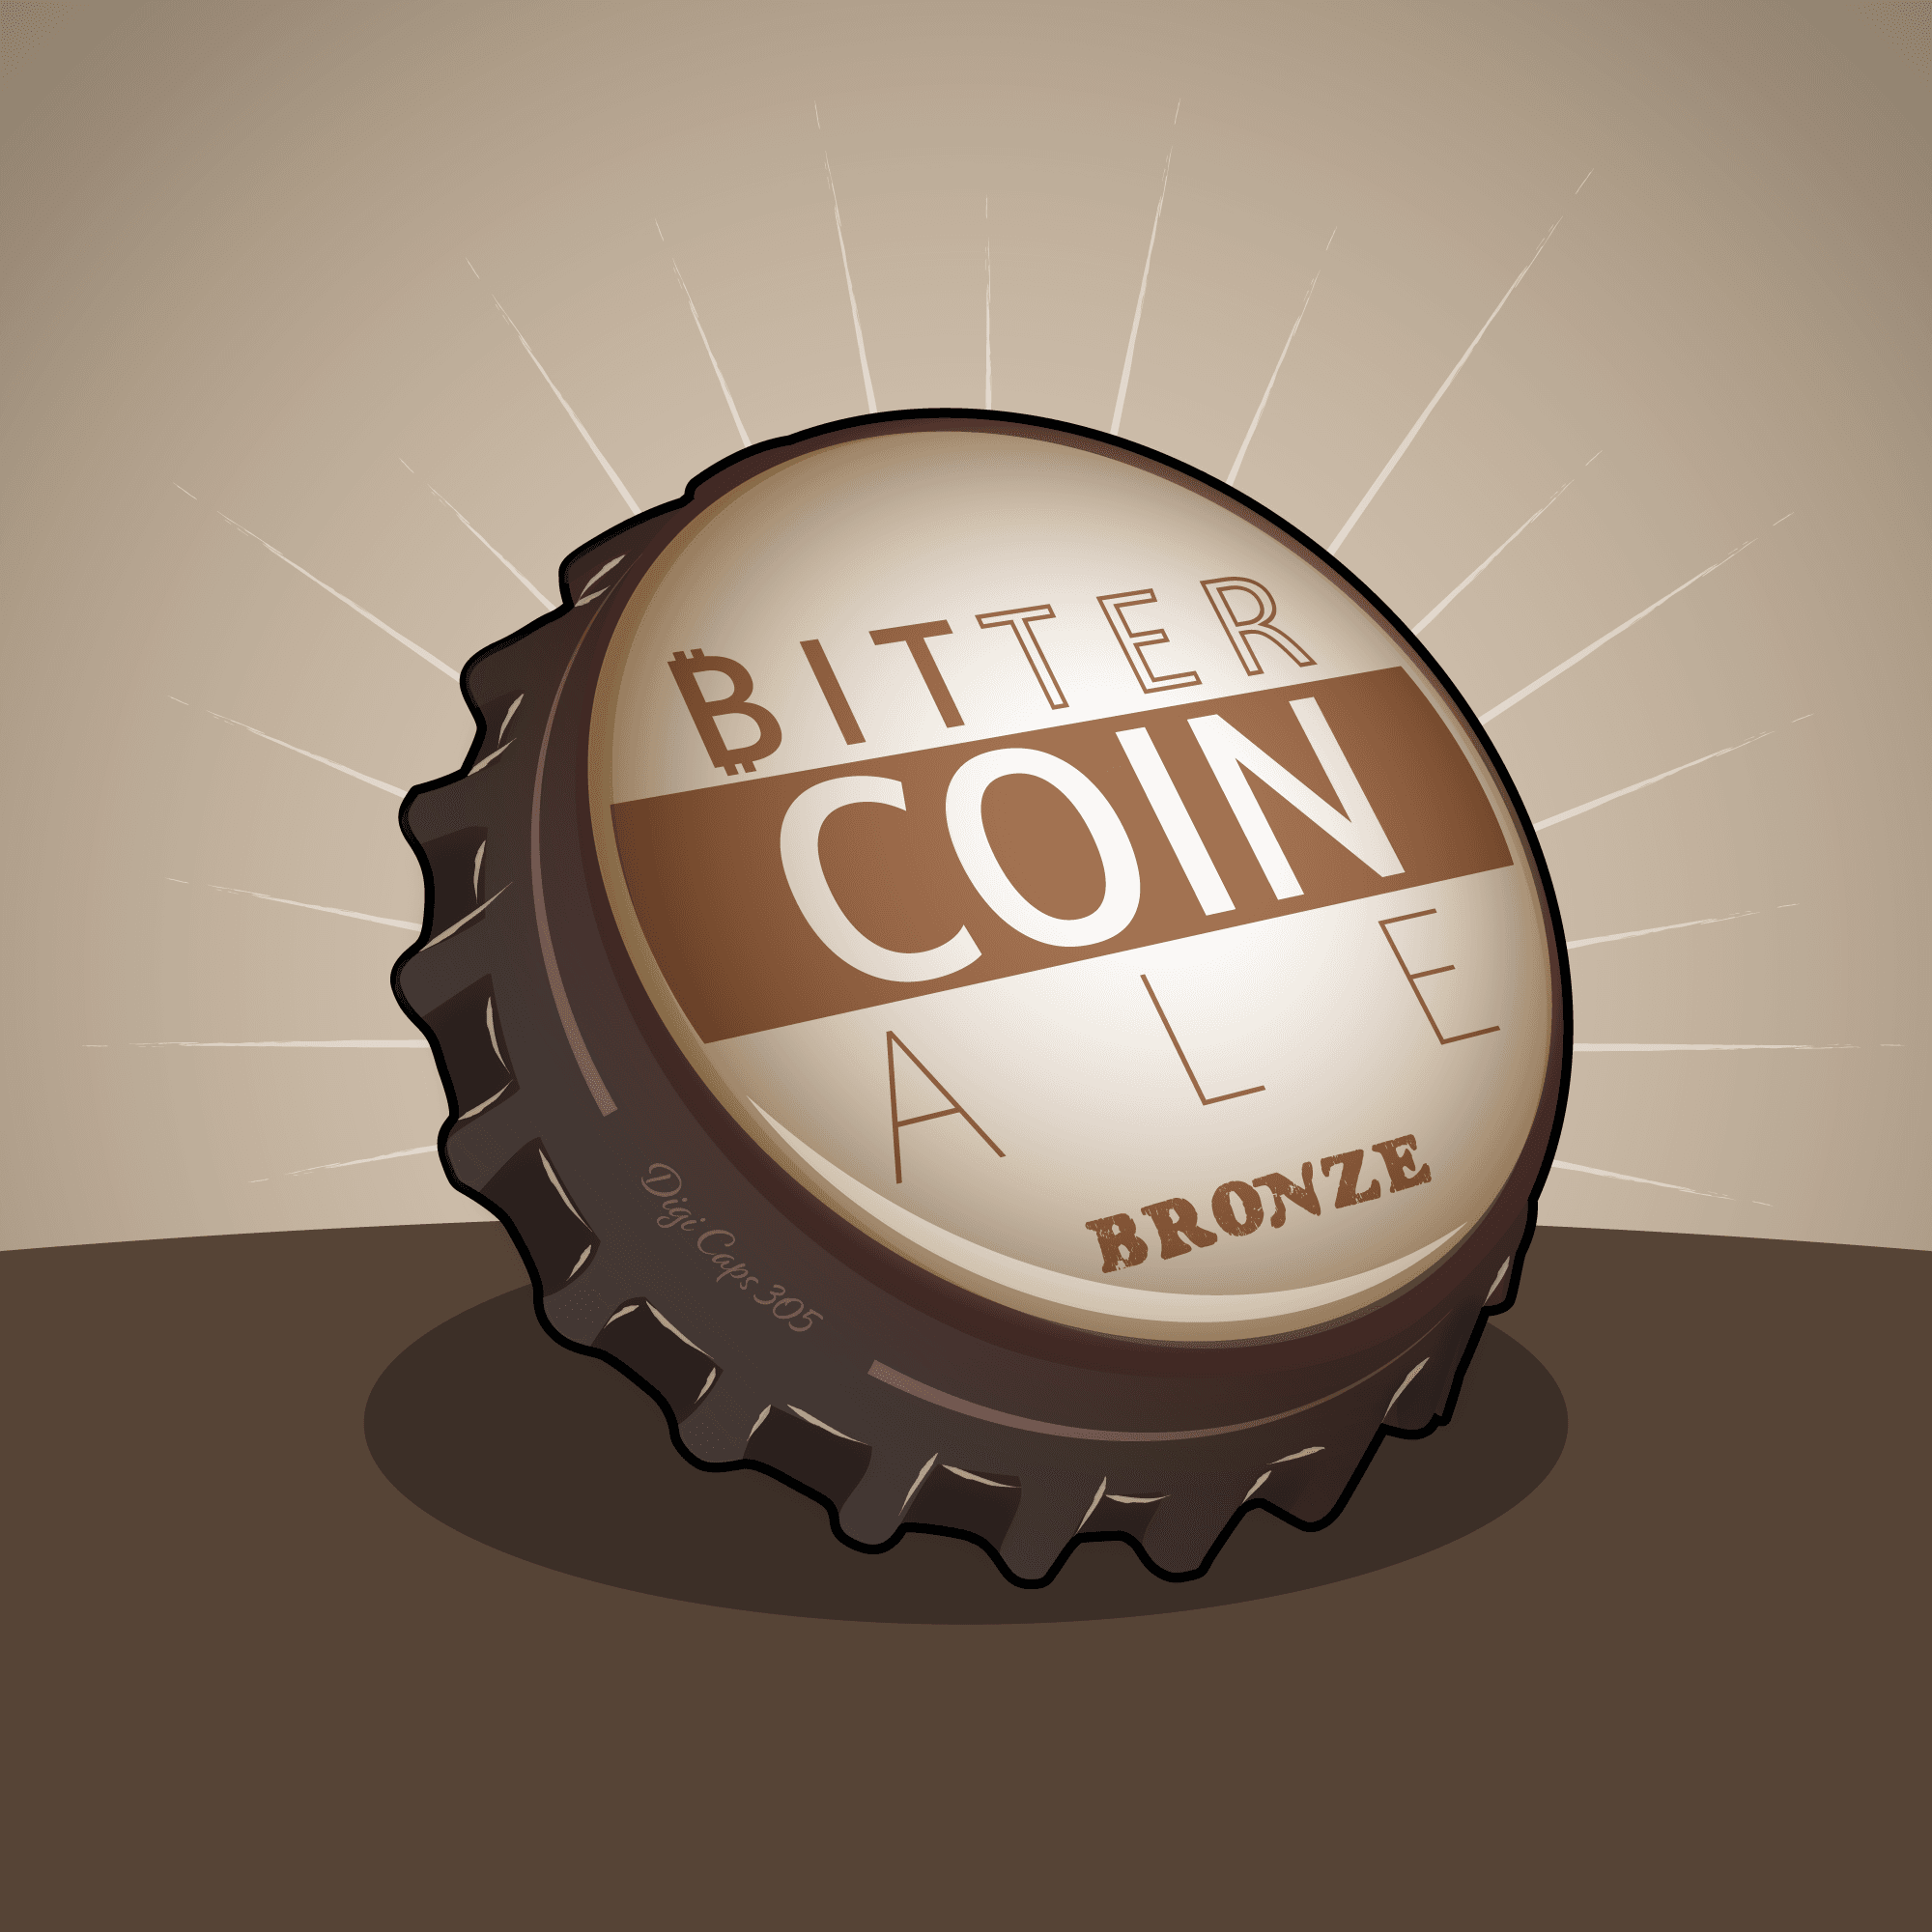 Bitter Coin Ale Bronze Bottle Cap